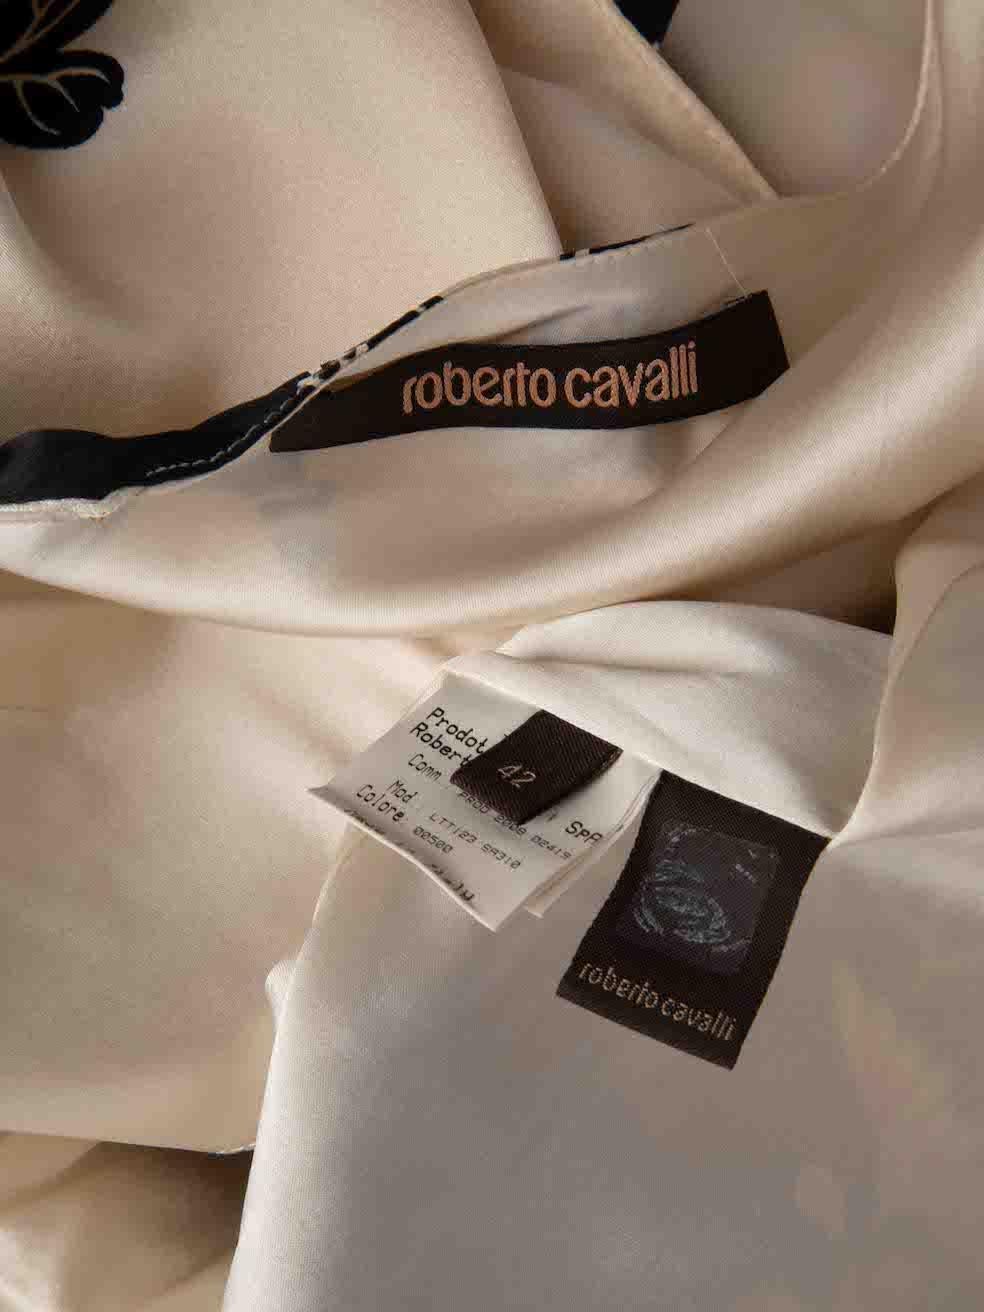 Roberto Cavalli Floral Print Lace Trim Mini Dress Size M For Sale 2